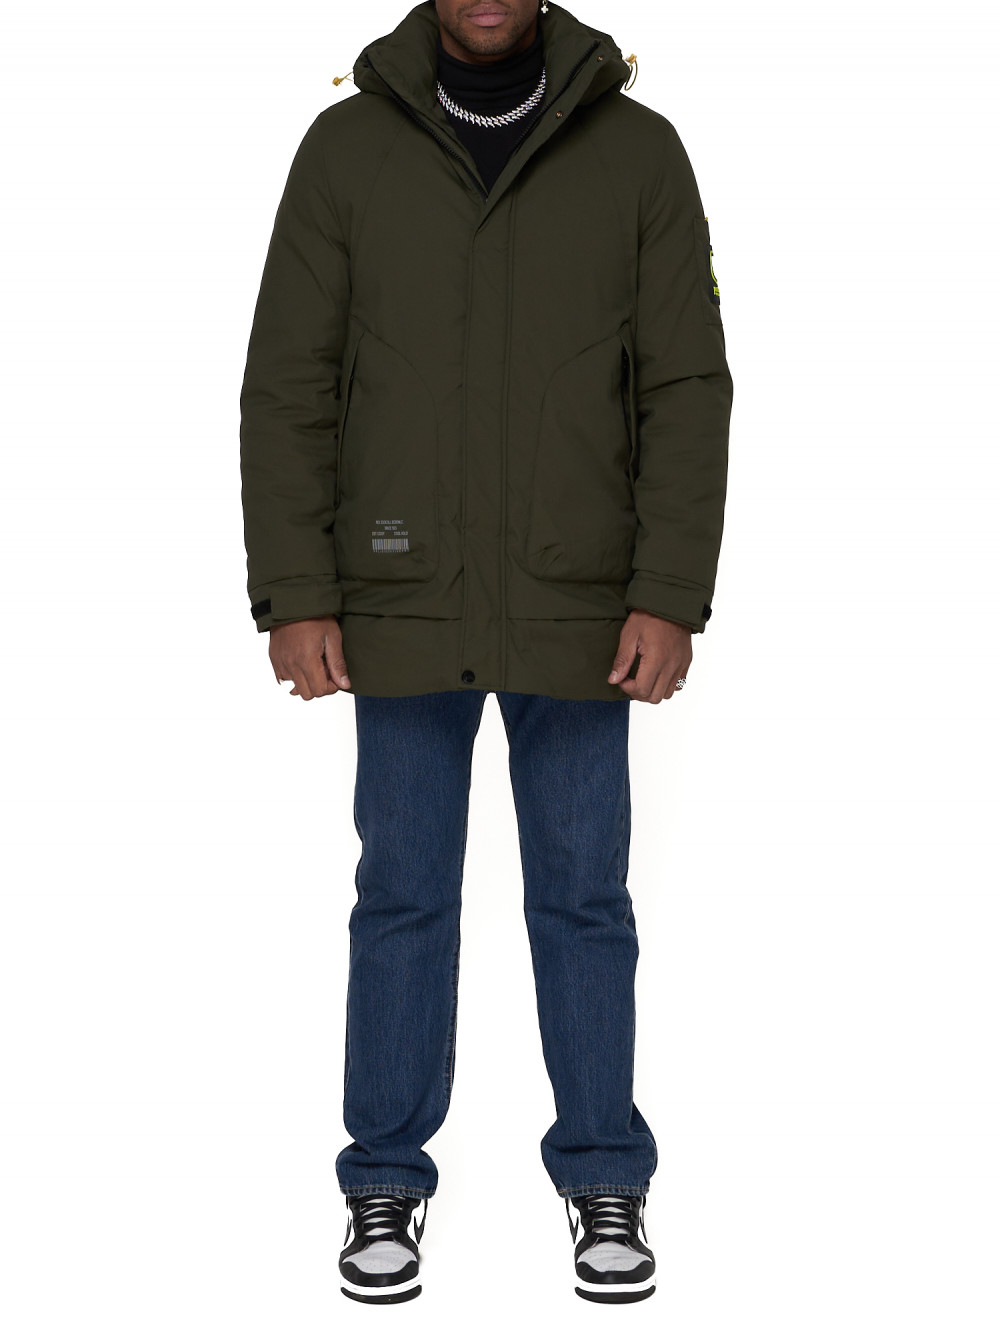 Спортивная куртка мужская NoBrand AD90016 хаки L